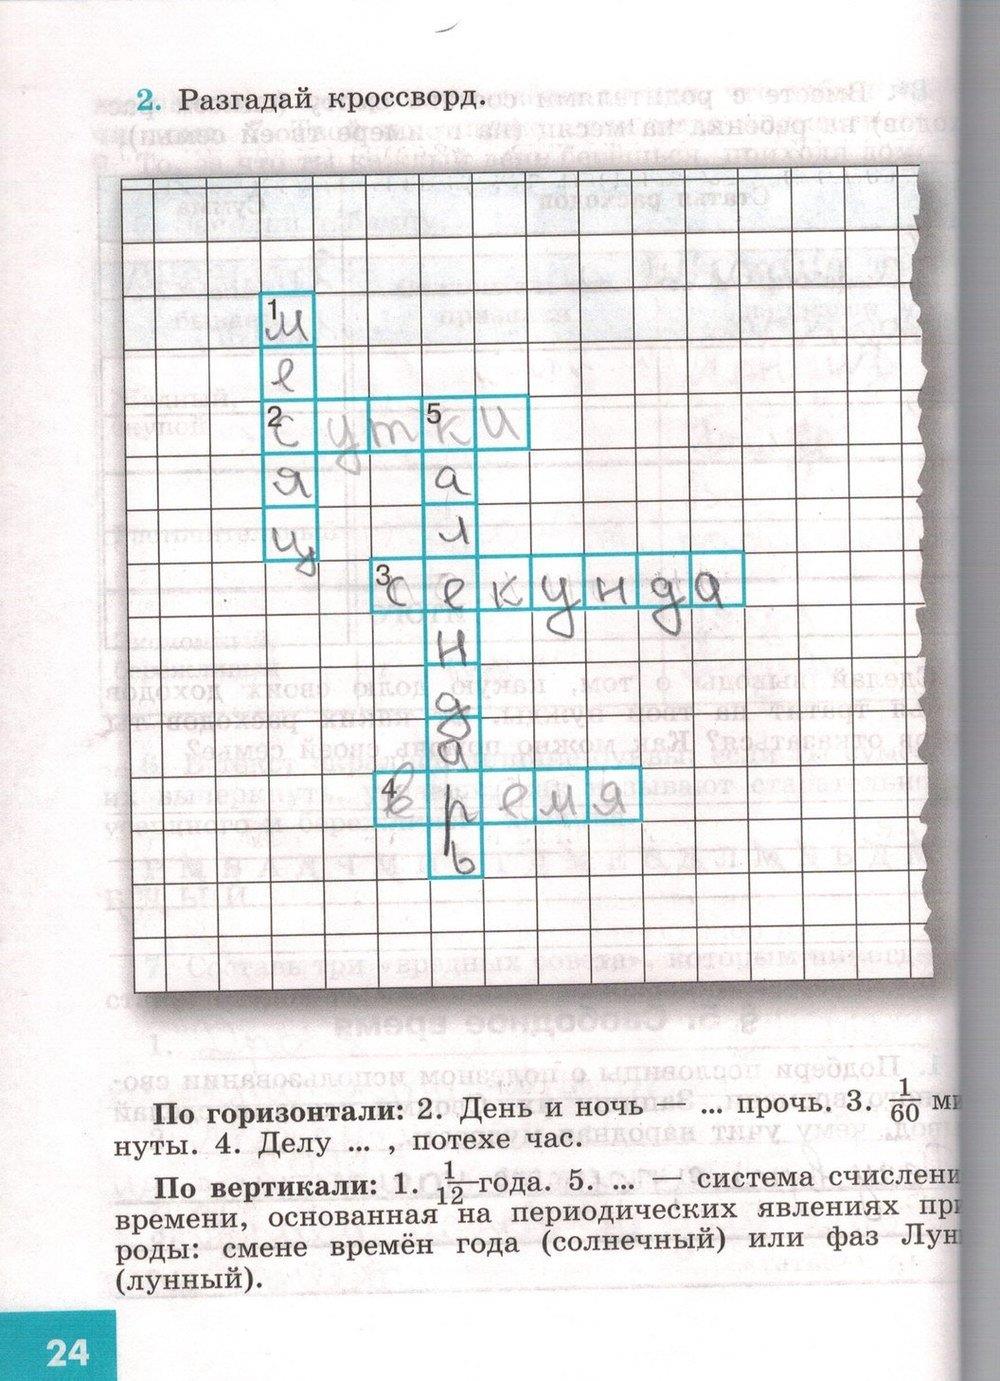 гдз 5 класс рабочая тетрадь страница 24 обществознание Иванова, Хотеенкова